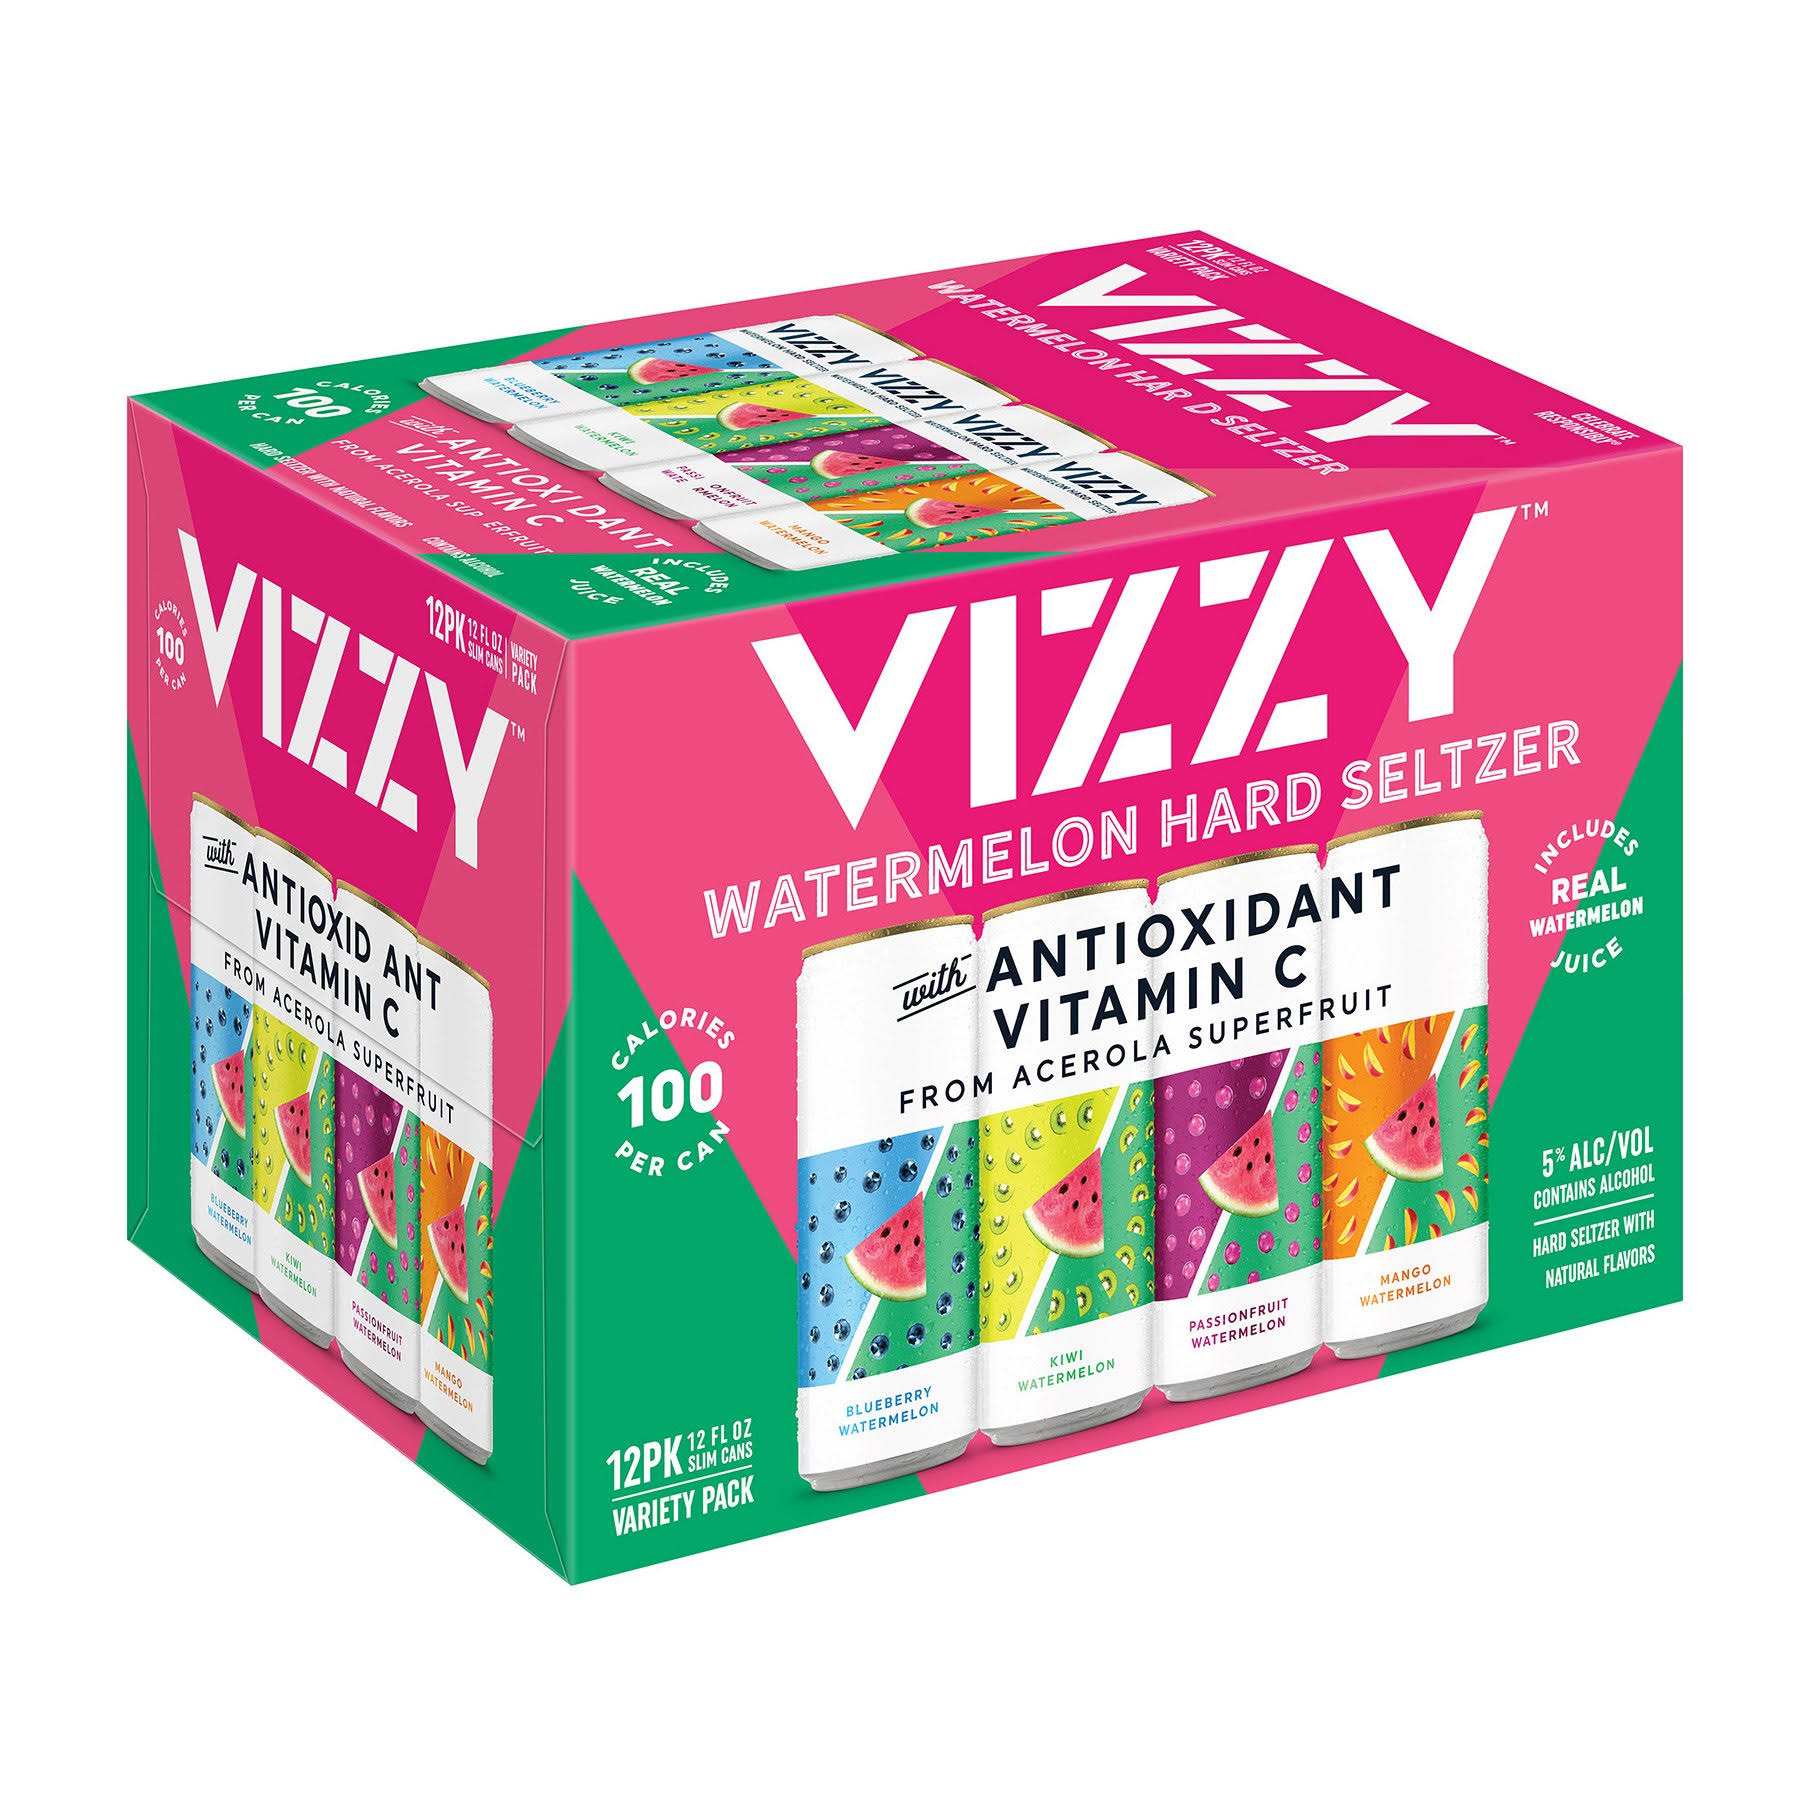 Vizzy Hard Seltzer, Watermelon, Variety Pack, 12 Pack - 12 pack, 12 fl oz slim cans